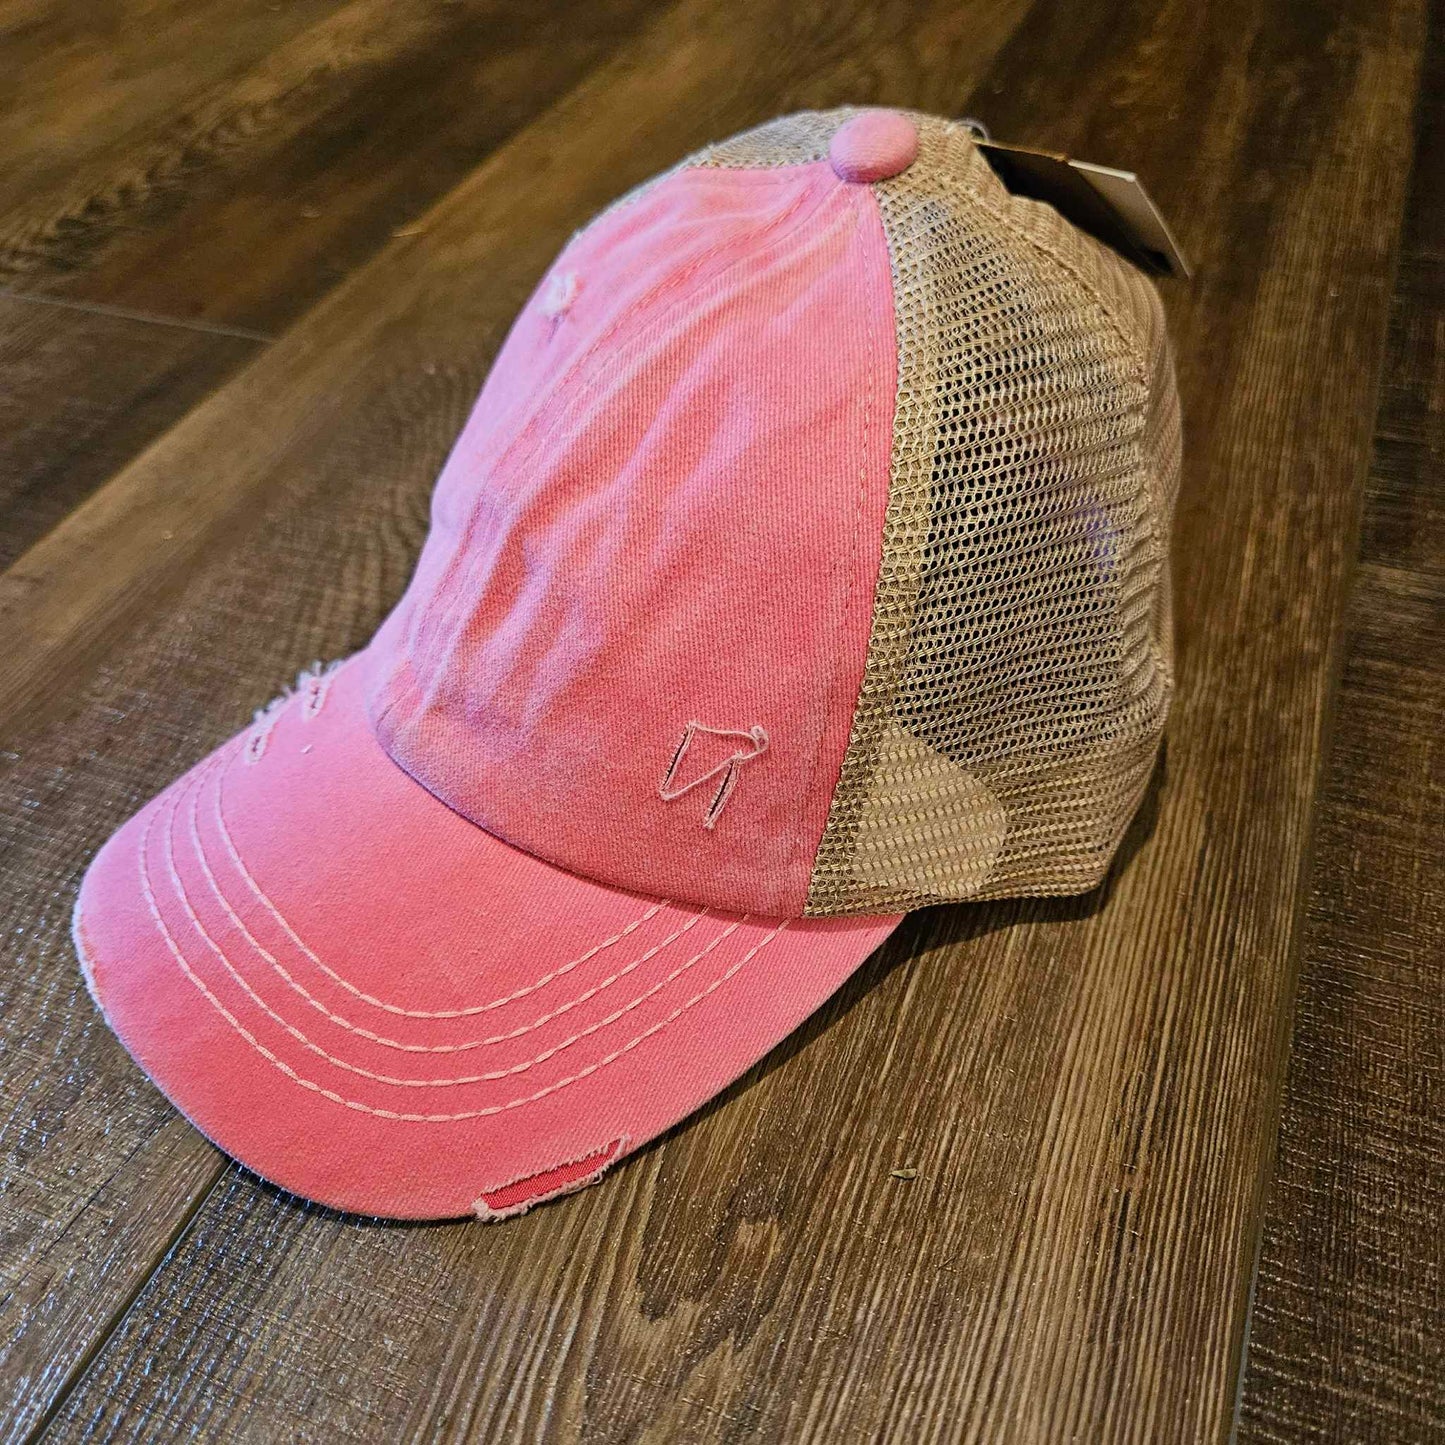 Distressed Pink Criss-Cross Ponytail Cap CC Brand Ponytail Baseball Cap Judson 